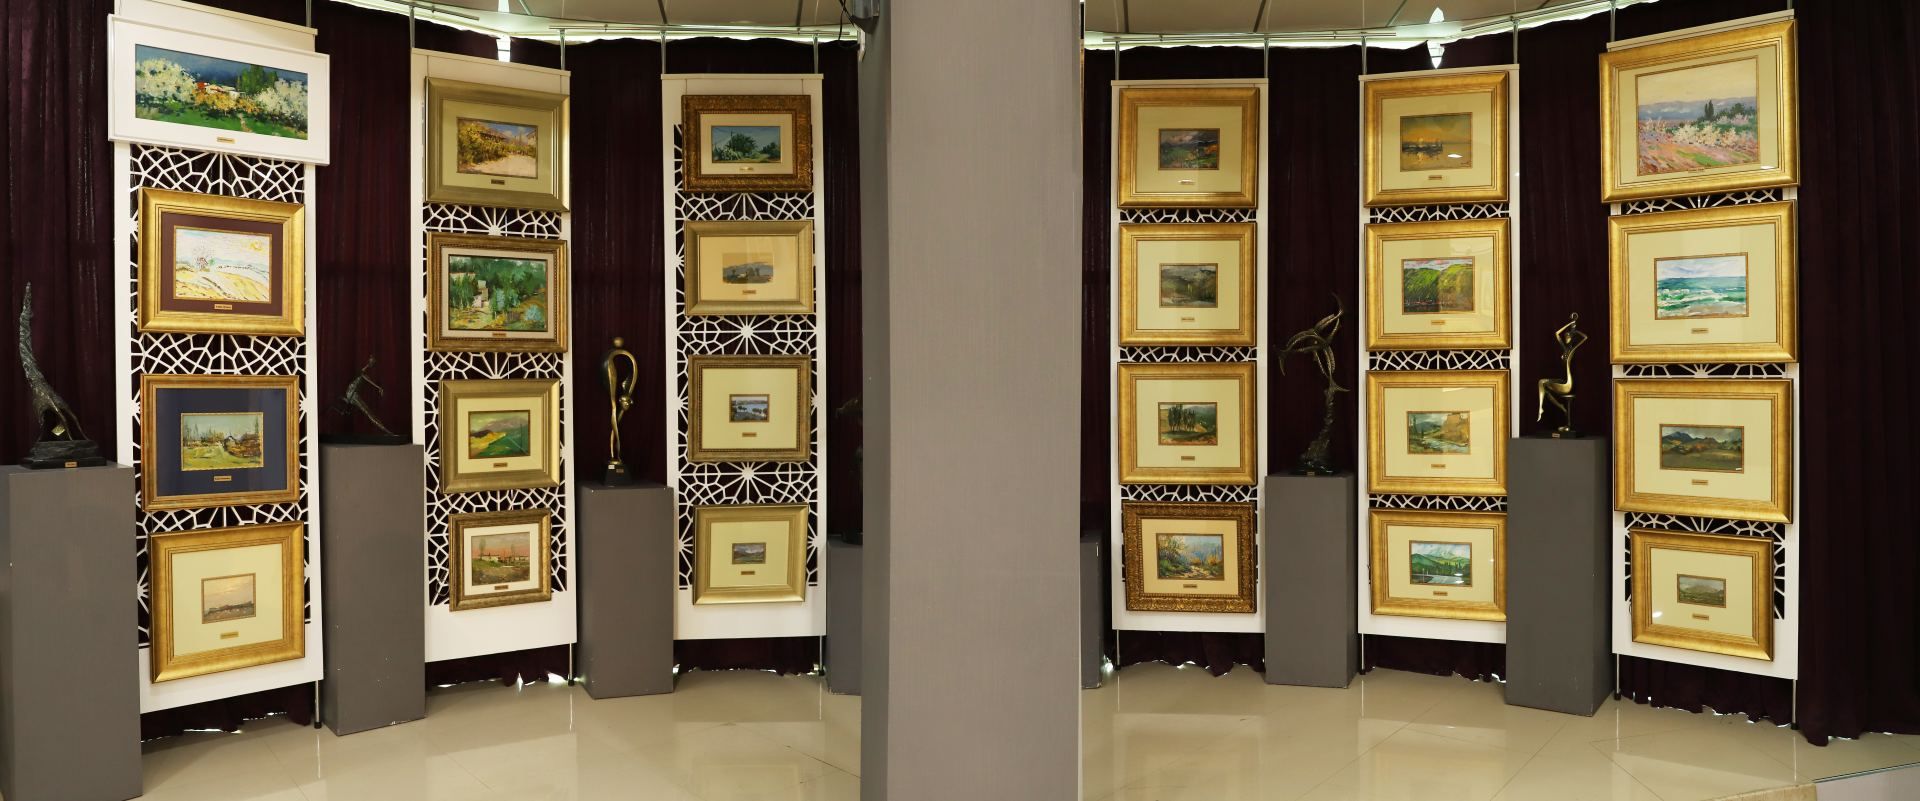 Khatai Arts Center display colorful etude paintings [PHOTOS]